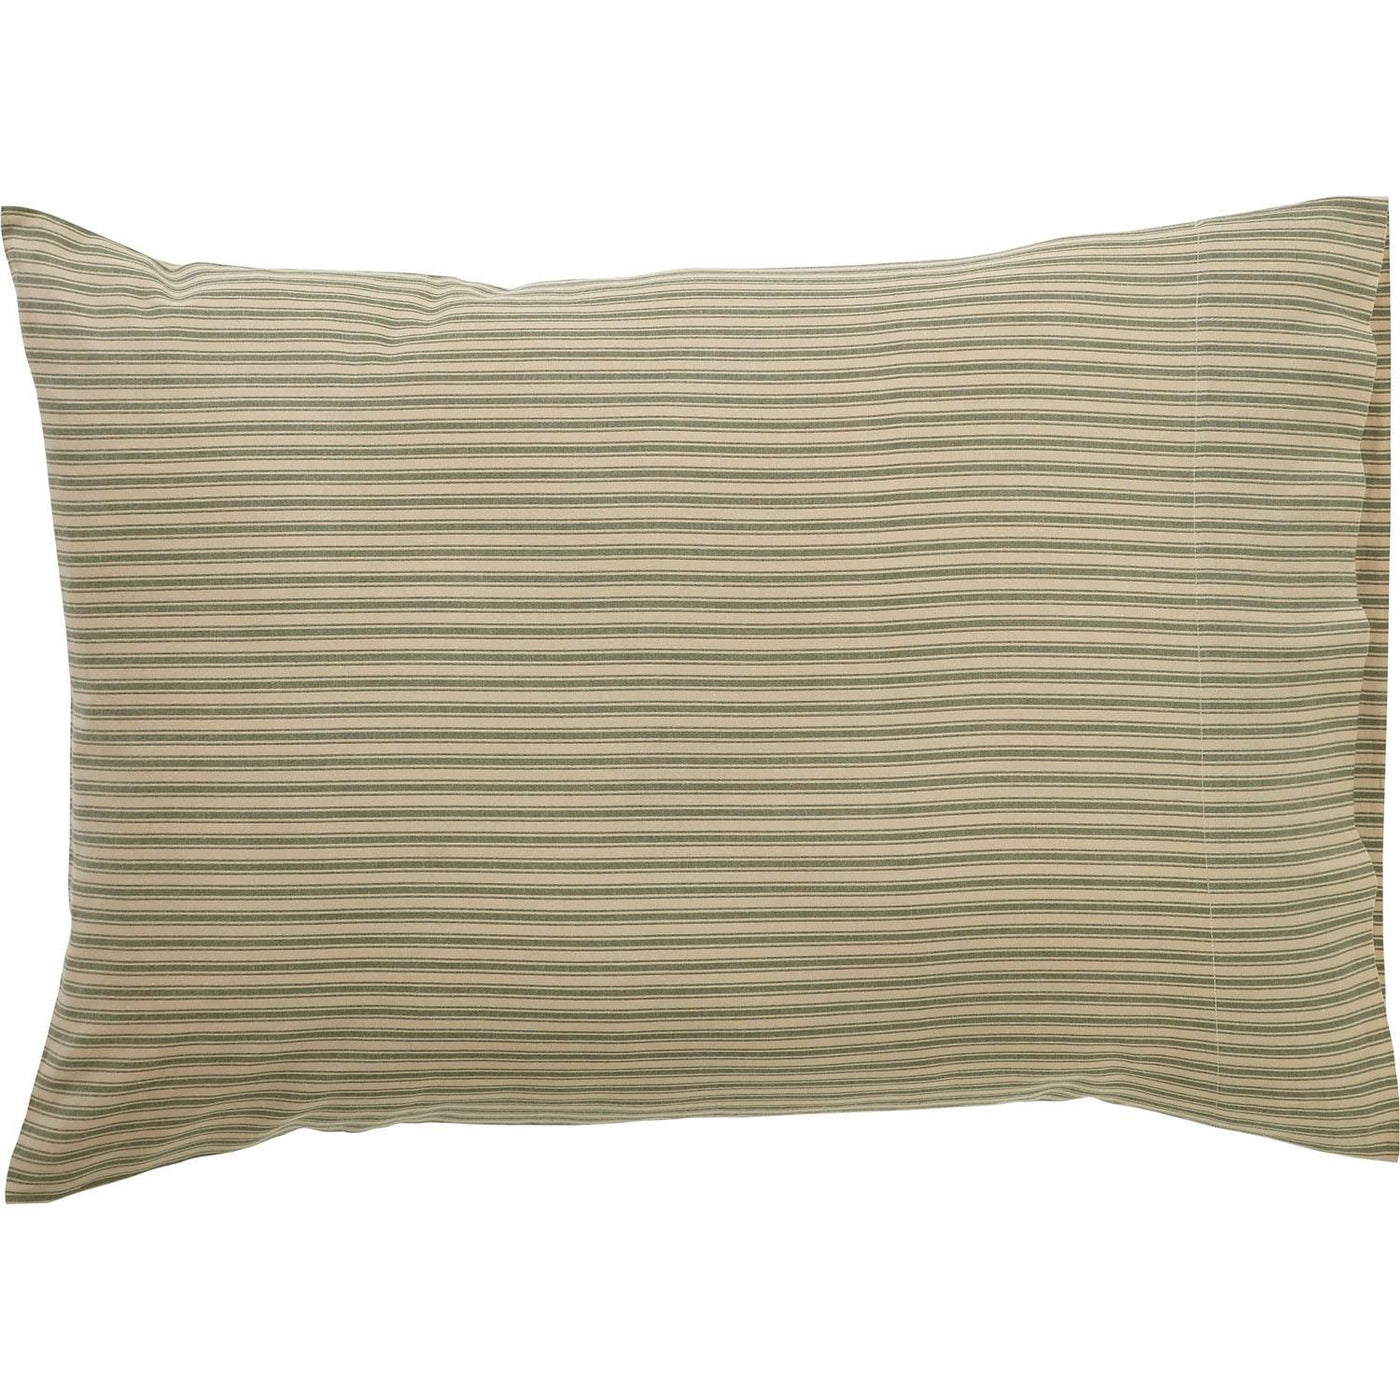 Mayfred Standard Pillow Case - Sage/Khaki - Set of 2